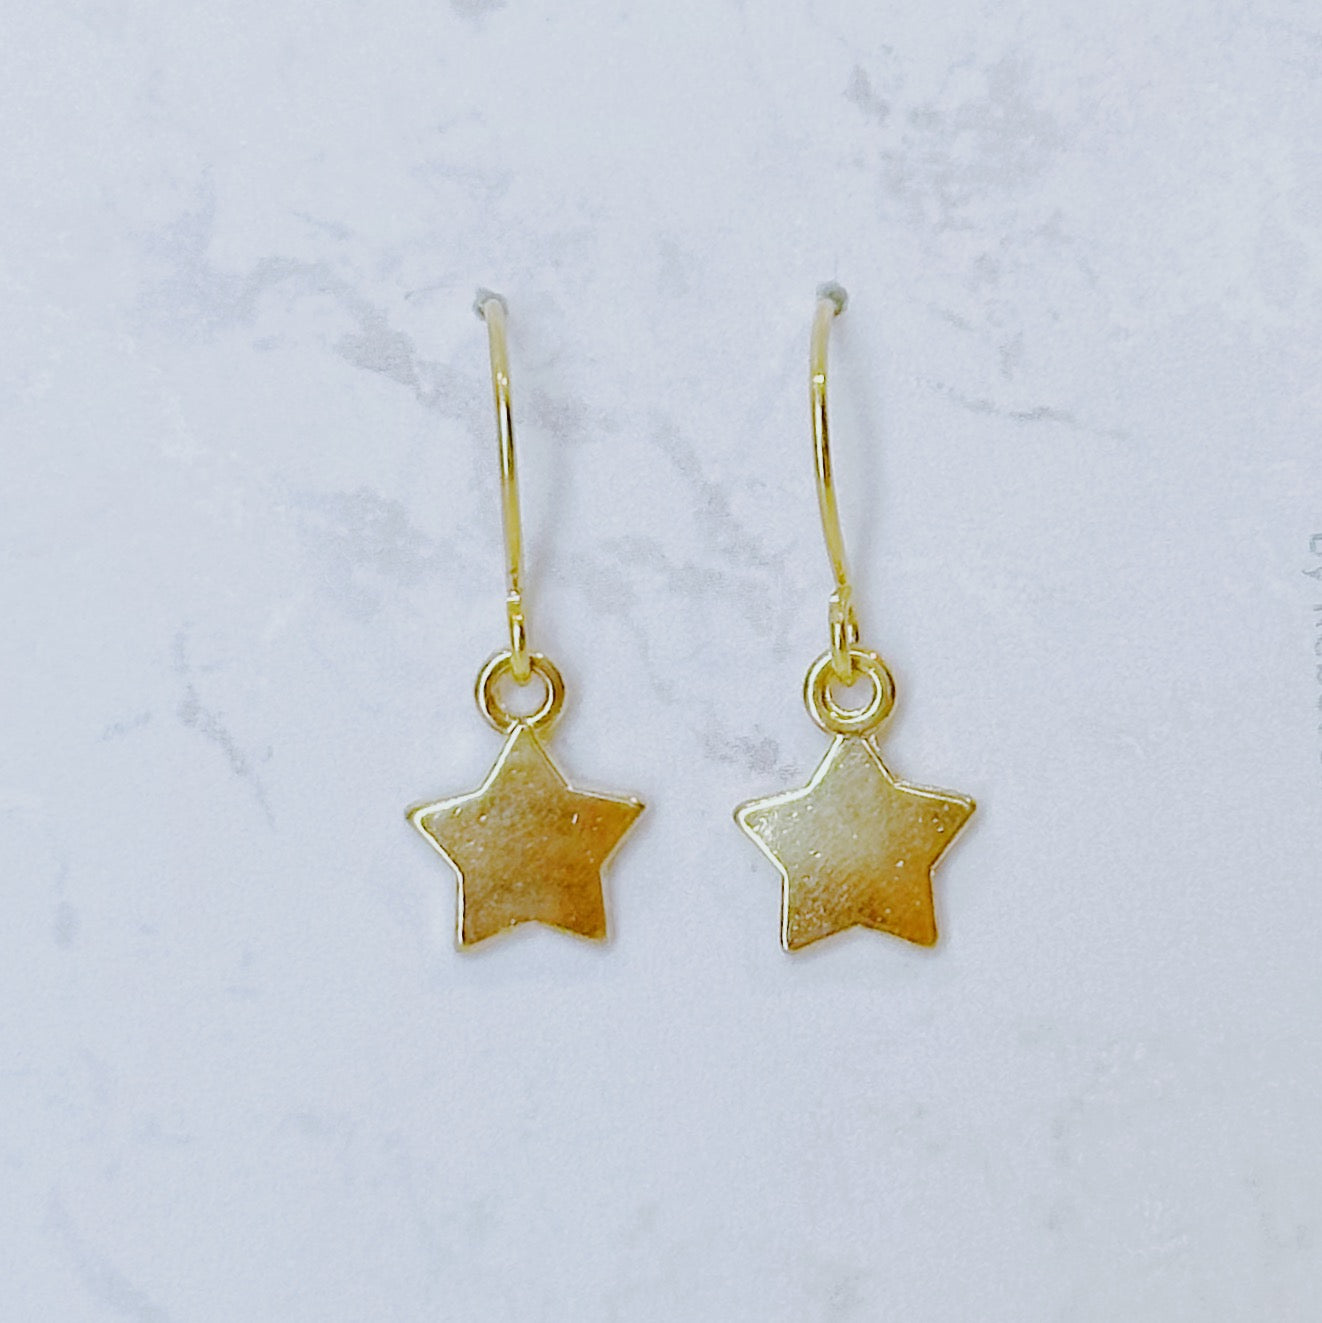 Star charm dangle earrings